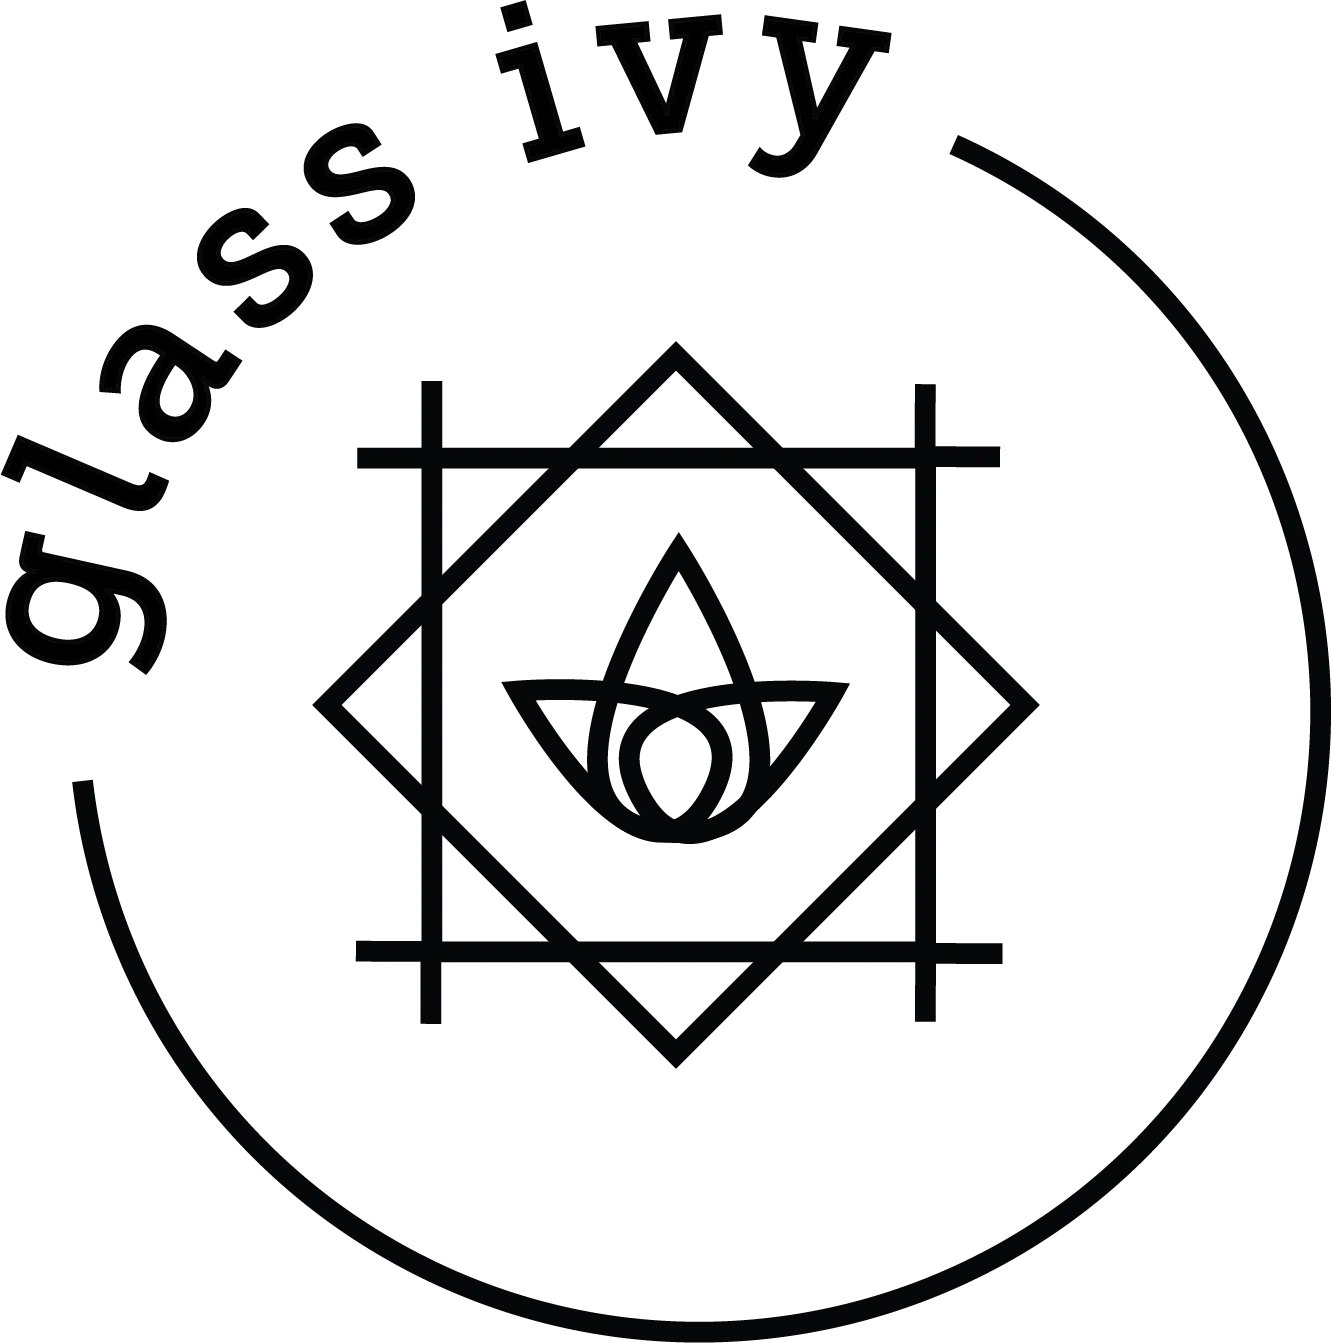 glass ivy marketing logo